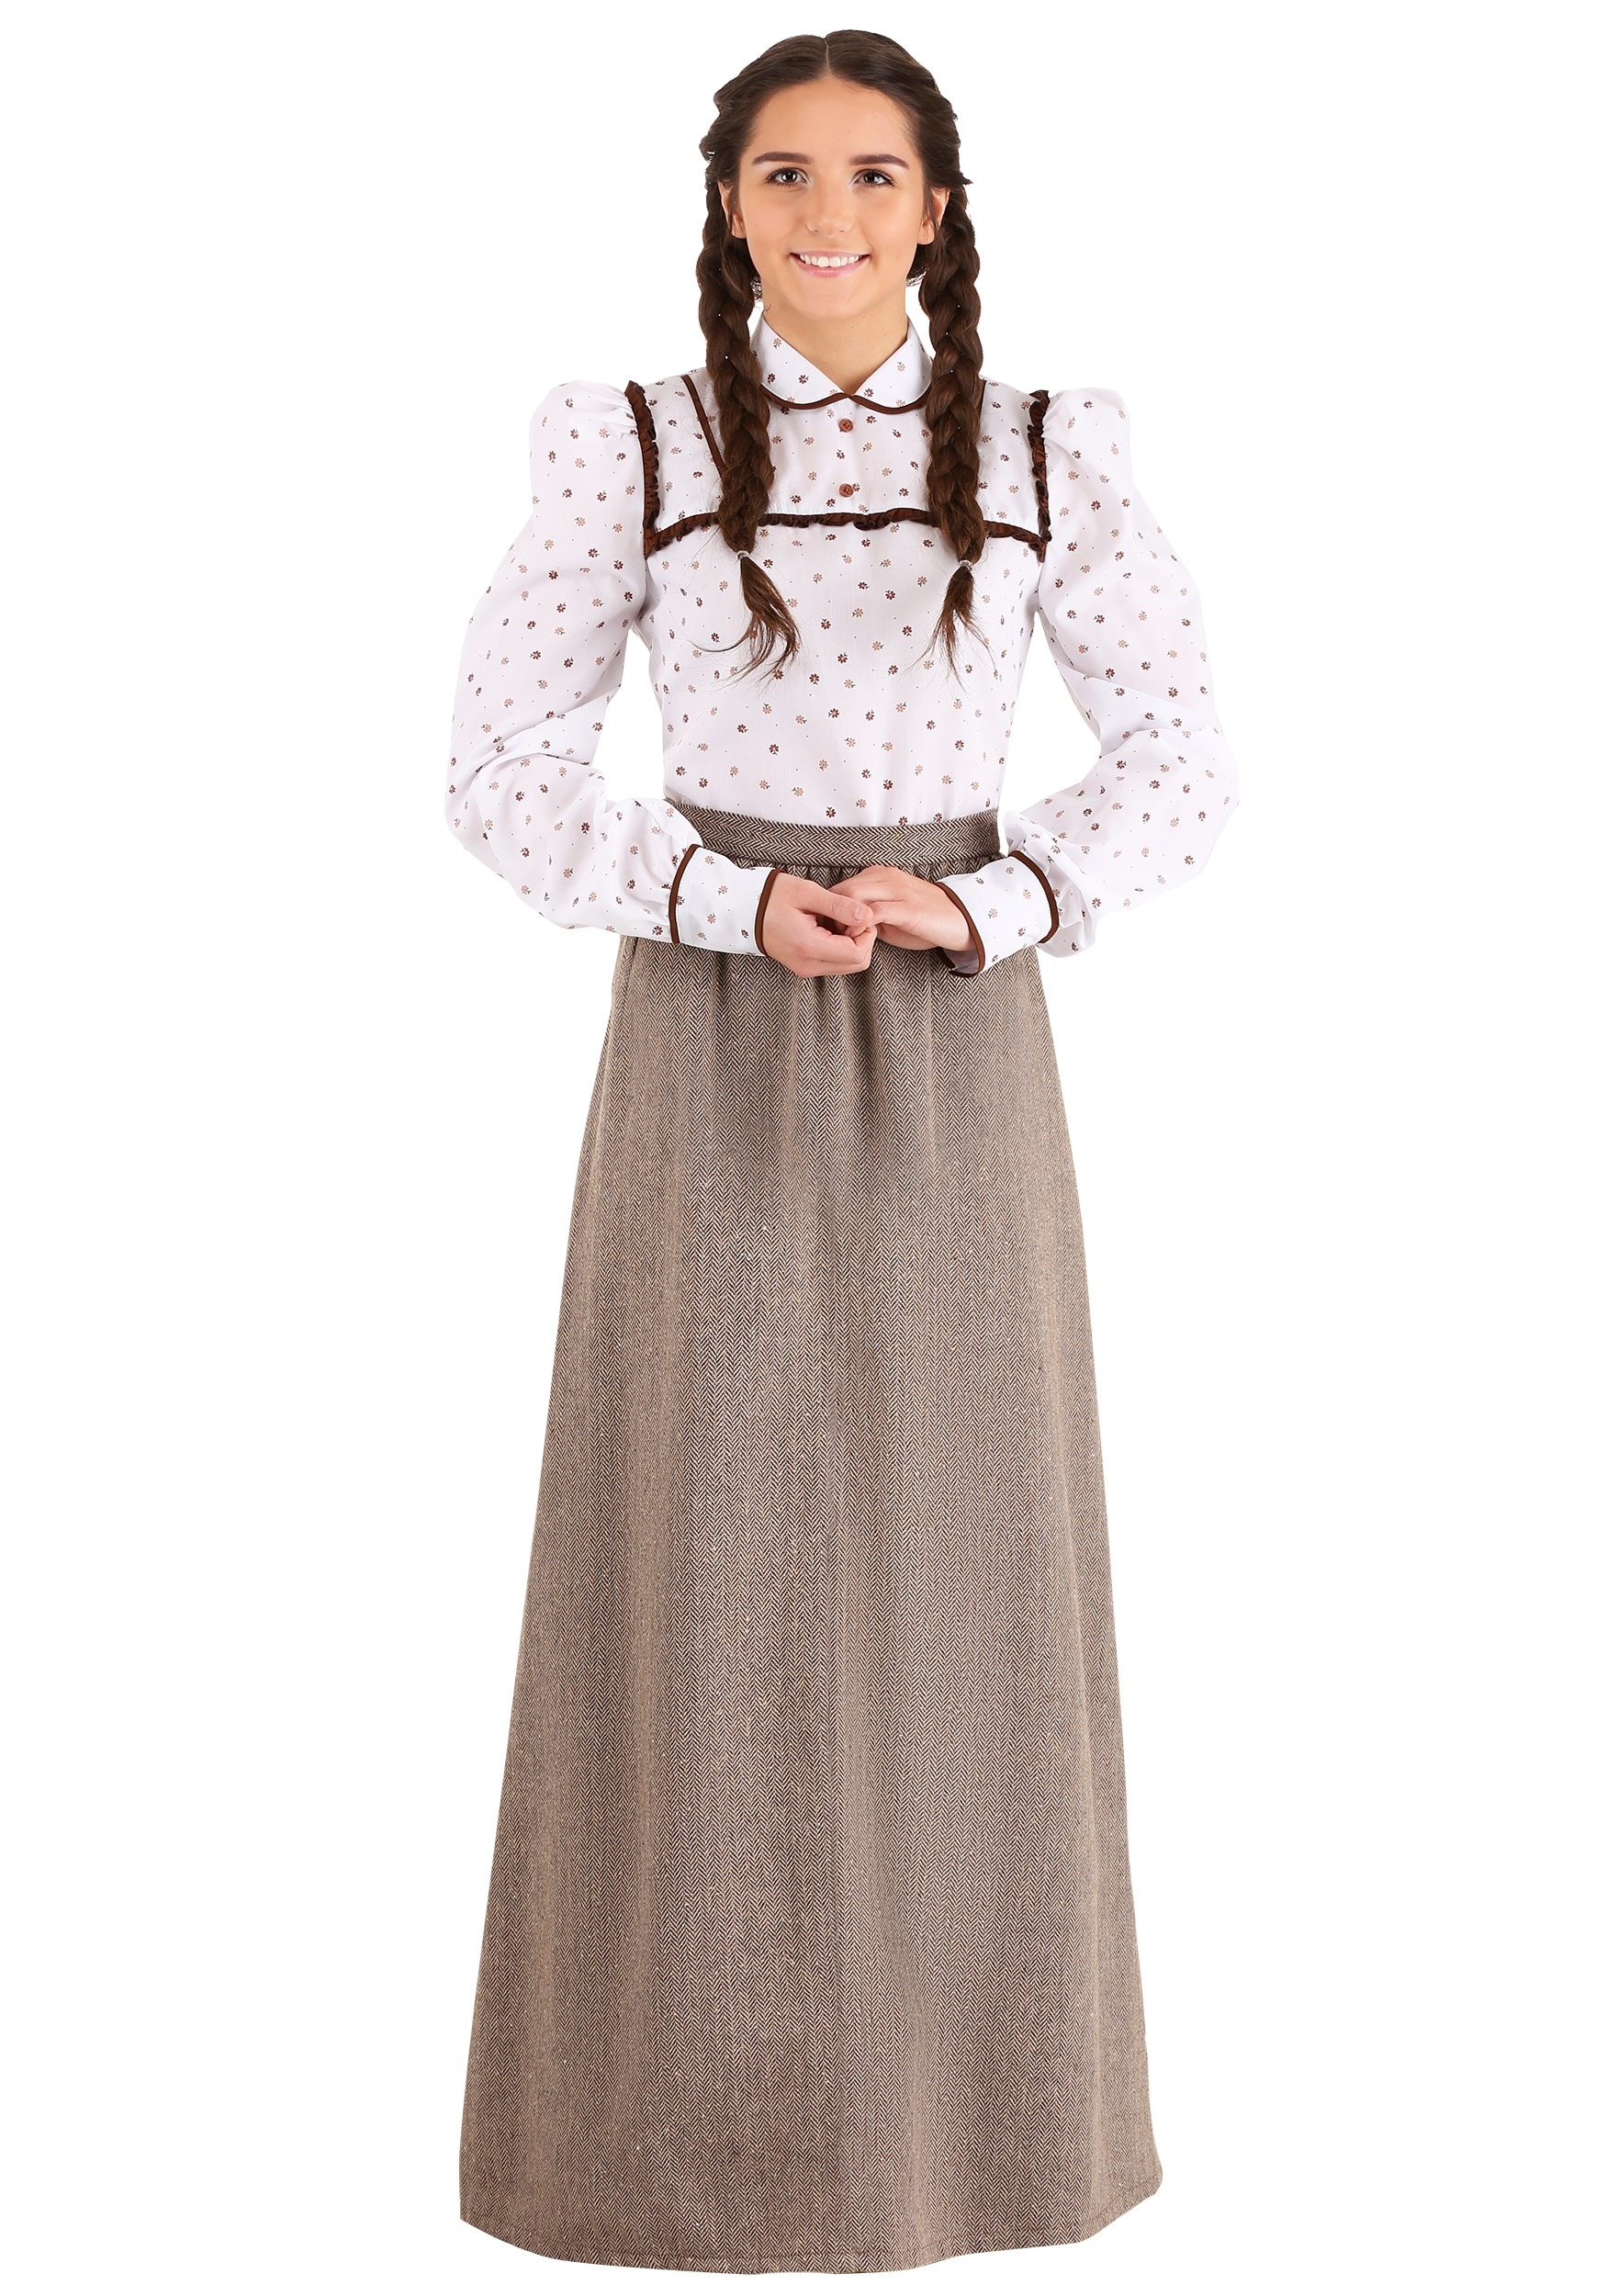 Women’s Westward Pioneer Costume